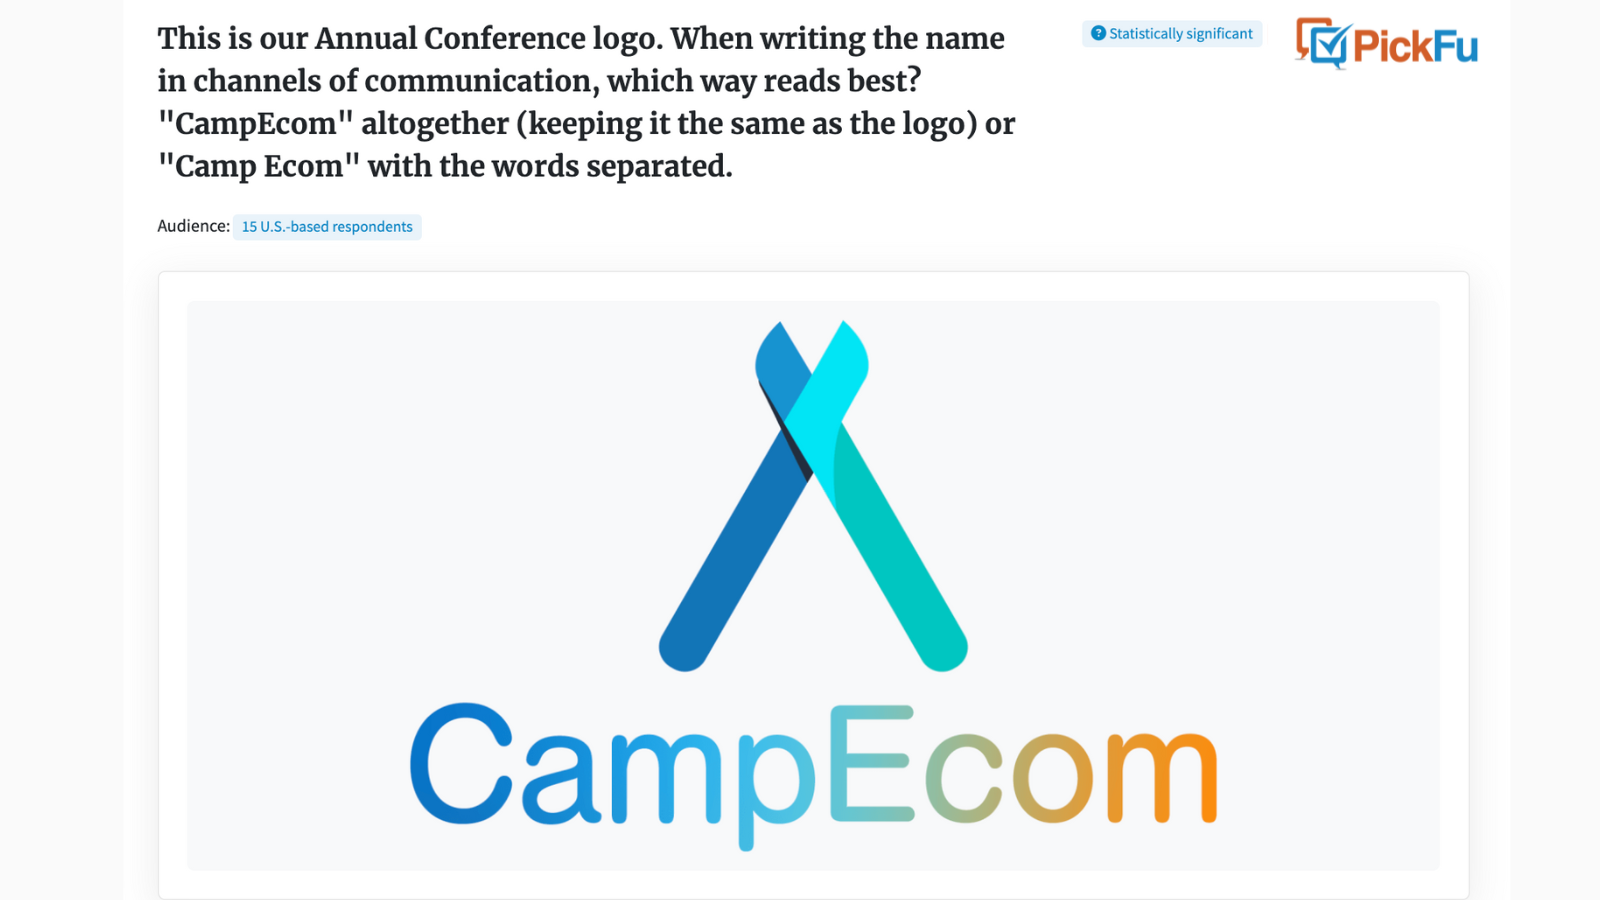 Screenshot of PickFu poll testing logo design and name of CampEcom conference.